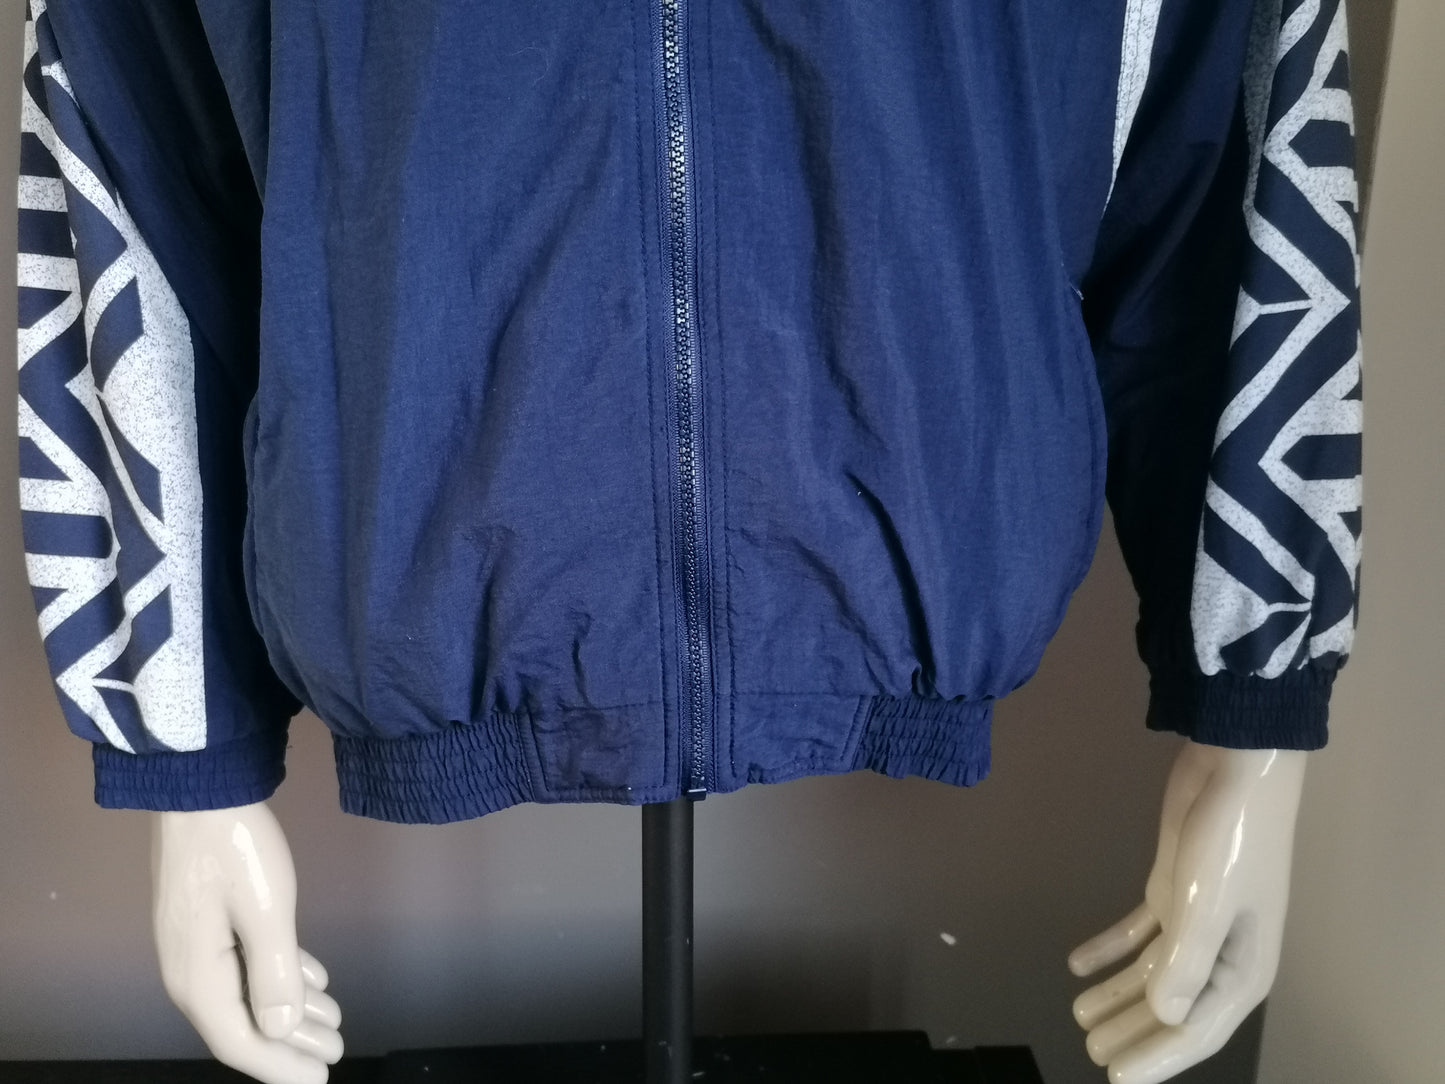 Vintage Erima 80S-90-Trainingsjacke. Blau weiß gelb gefärbt. Größe xl.